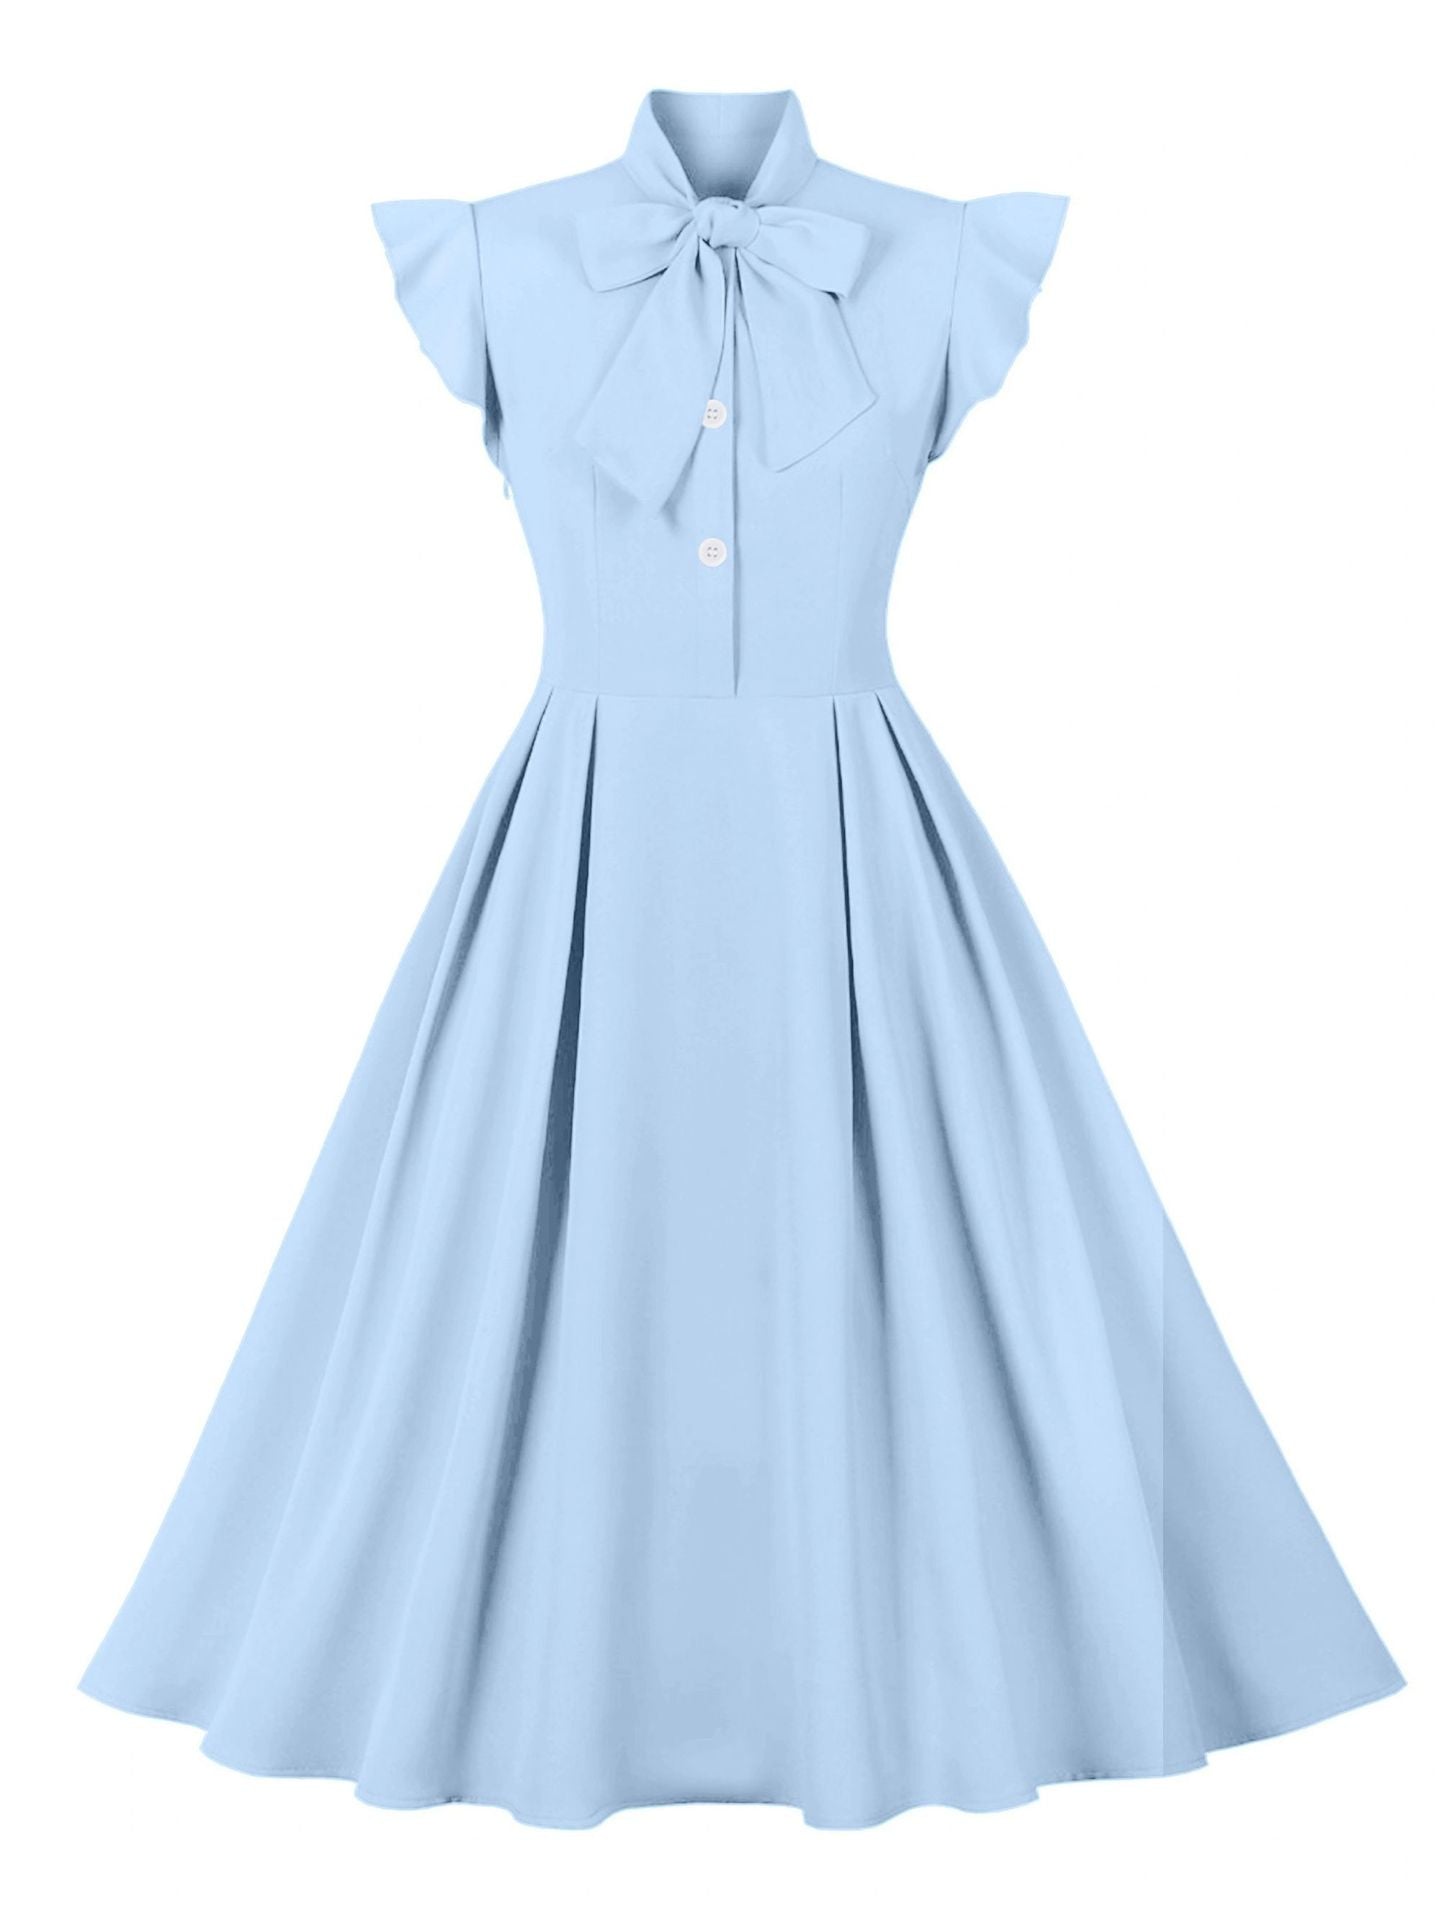 Vintage Ruffled Turnover Collar Dresses